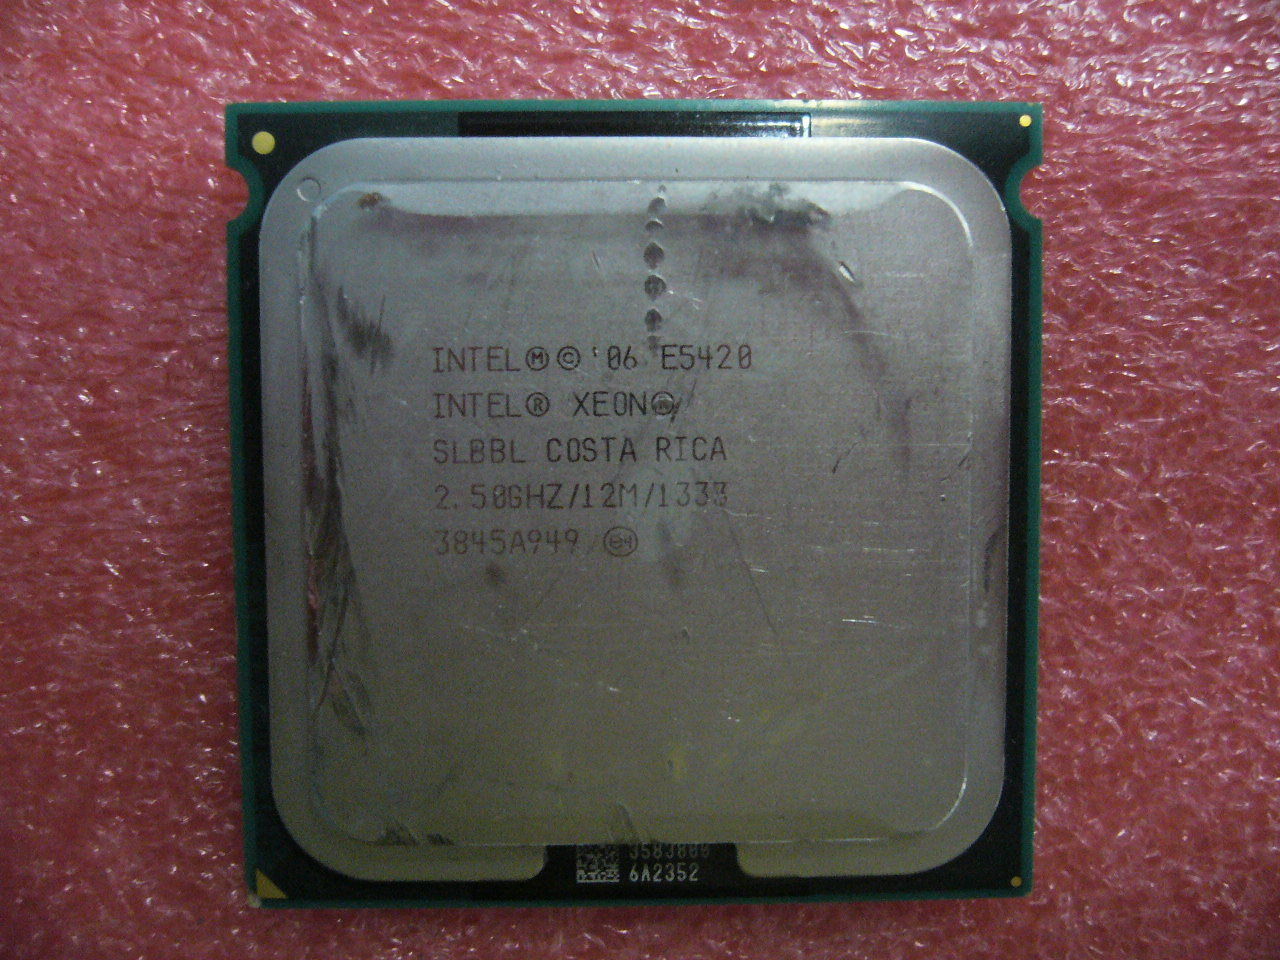 QTY 1x Intel Xeon CPU Quad Core E5420 2.50Ghz/12MB/1333Mhz LGA771 SLBBL - Click Image to Close